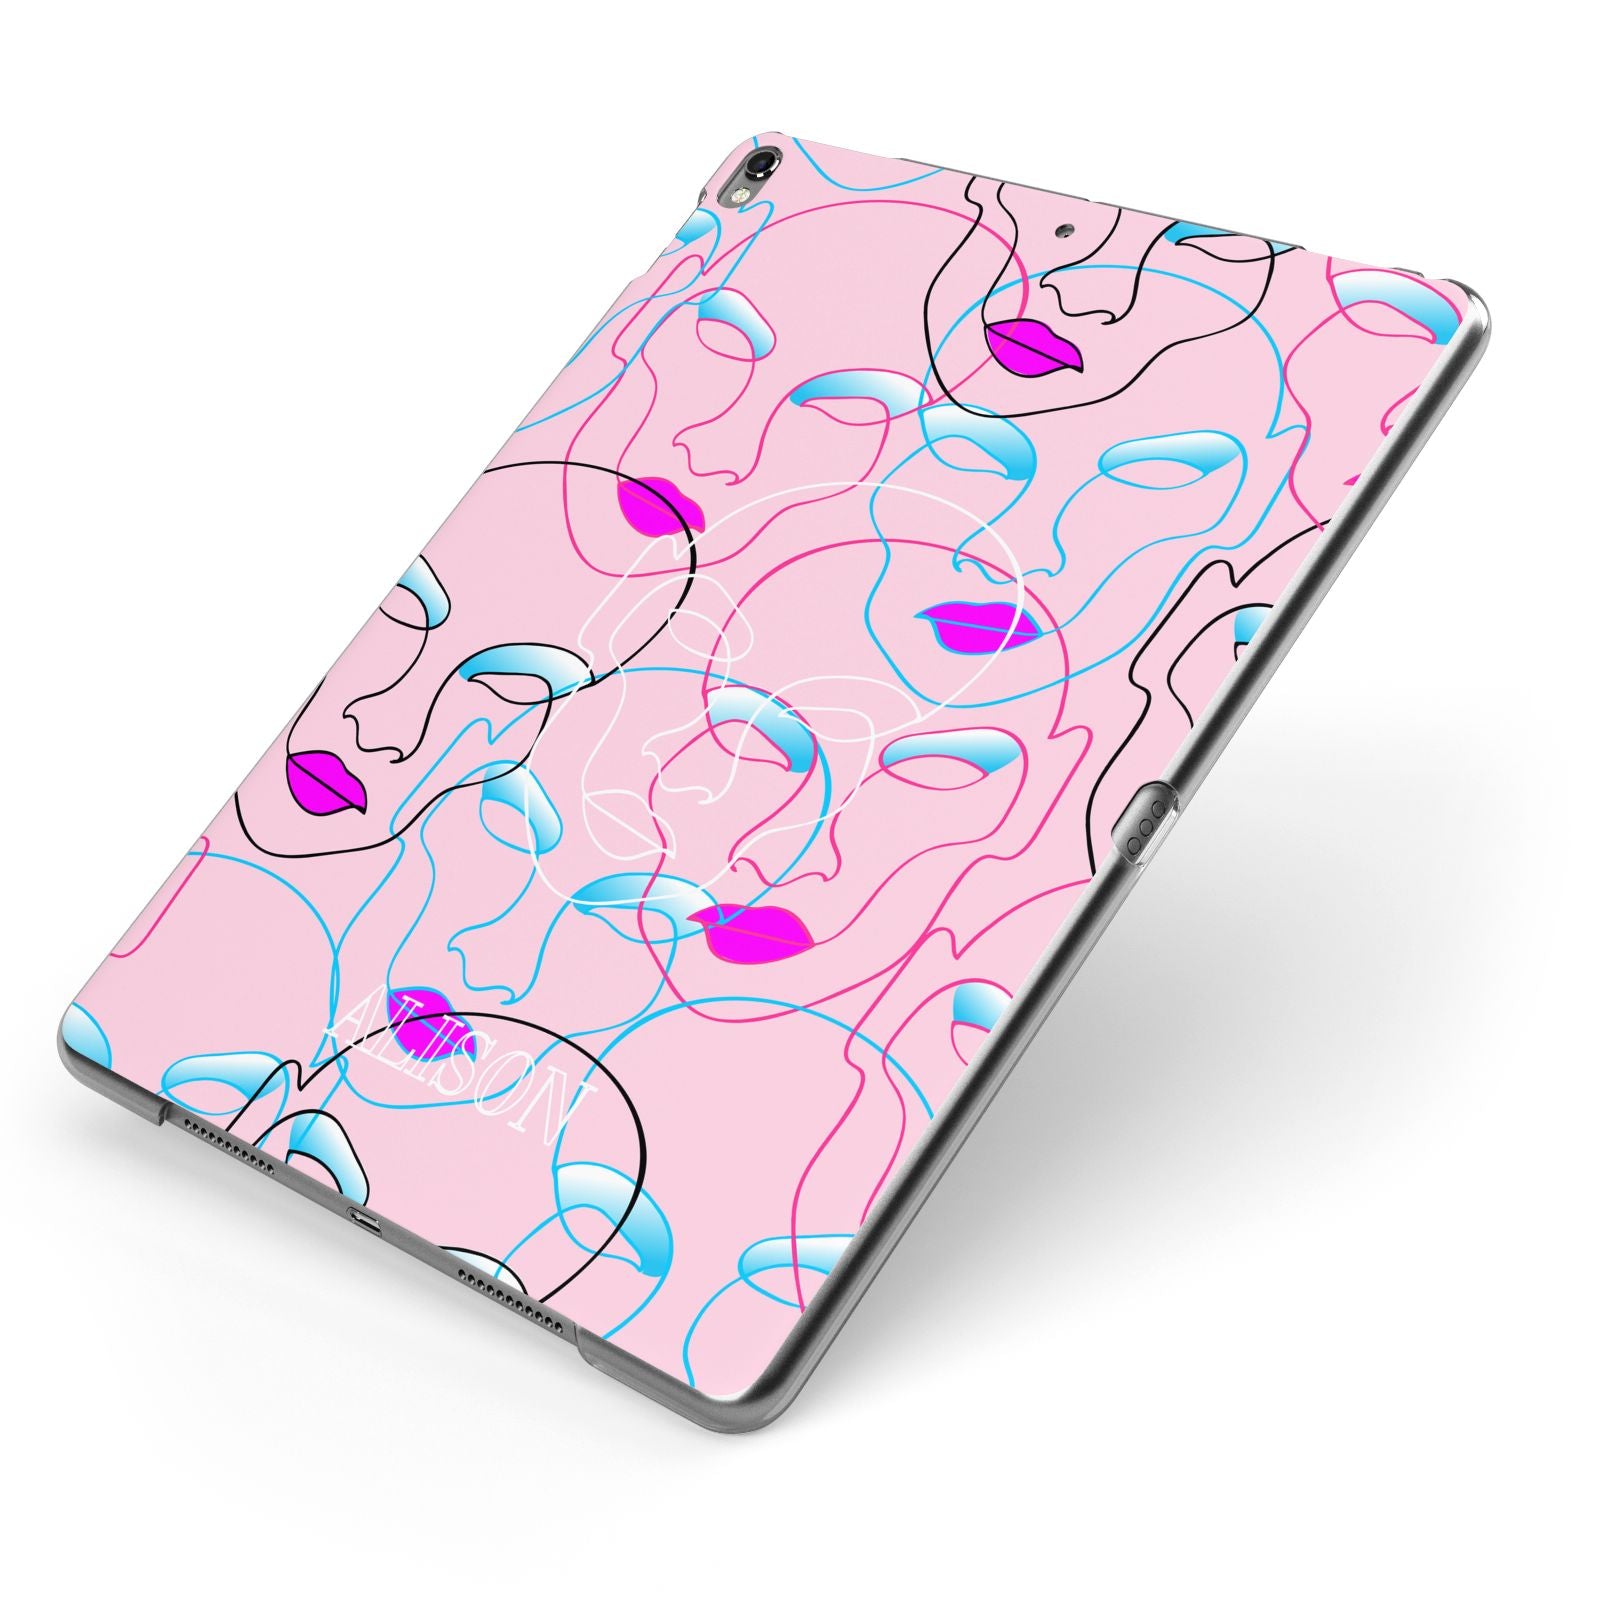 Personalised Pink Line Art Apple iPad Case on Grey iPad Side View